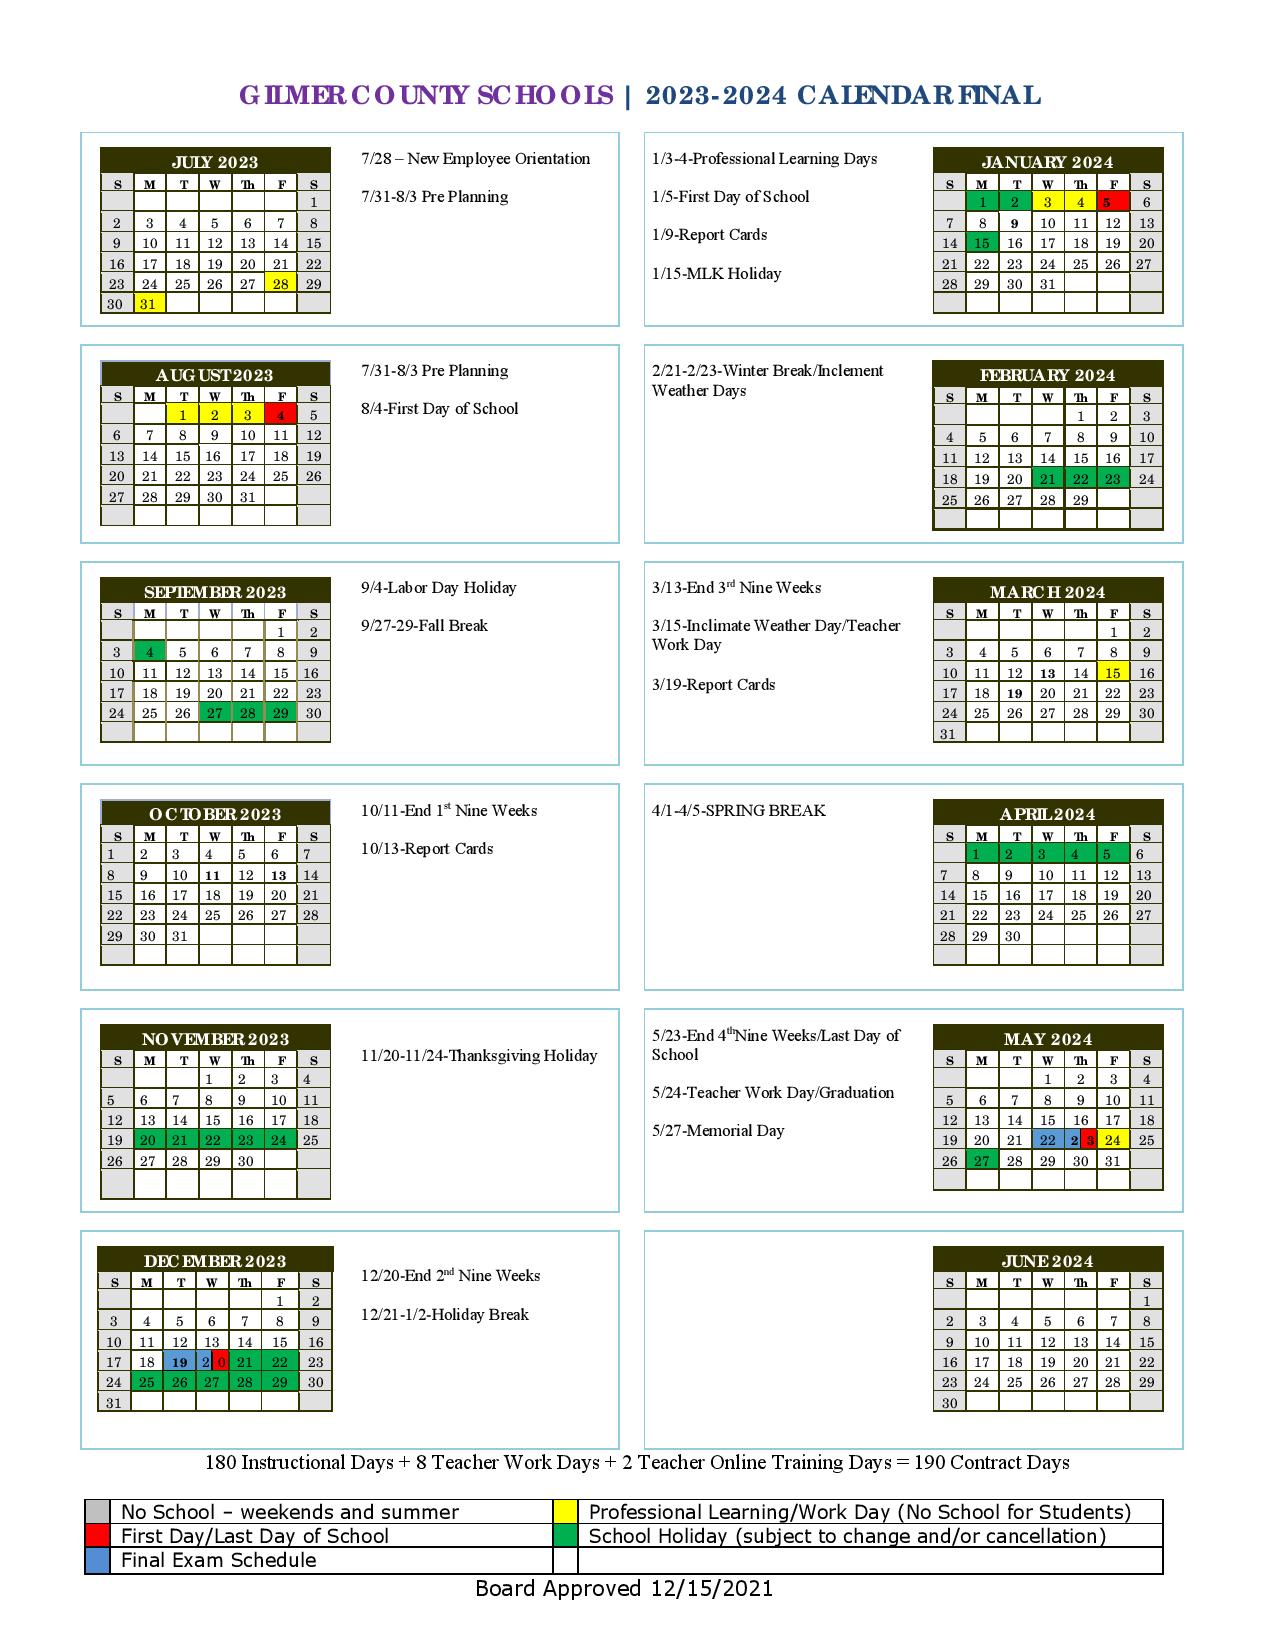 Gilmer County Charter Schools Calendar 20232024 in PDF School